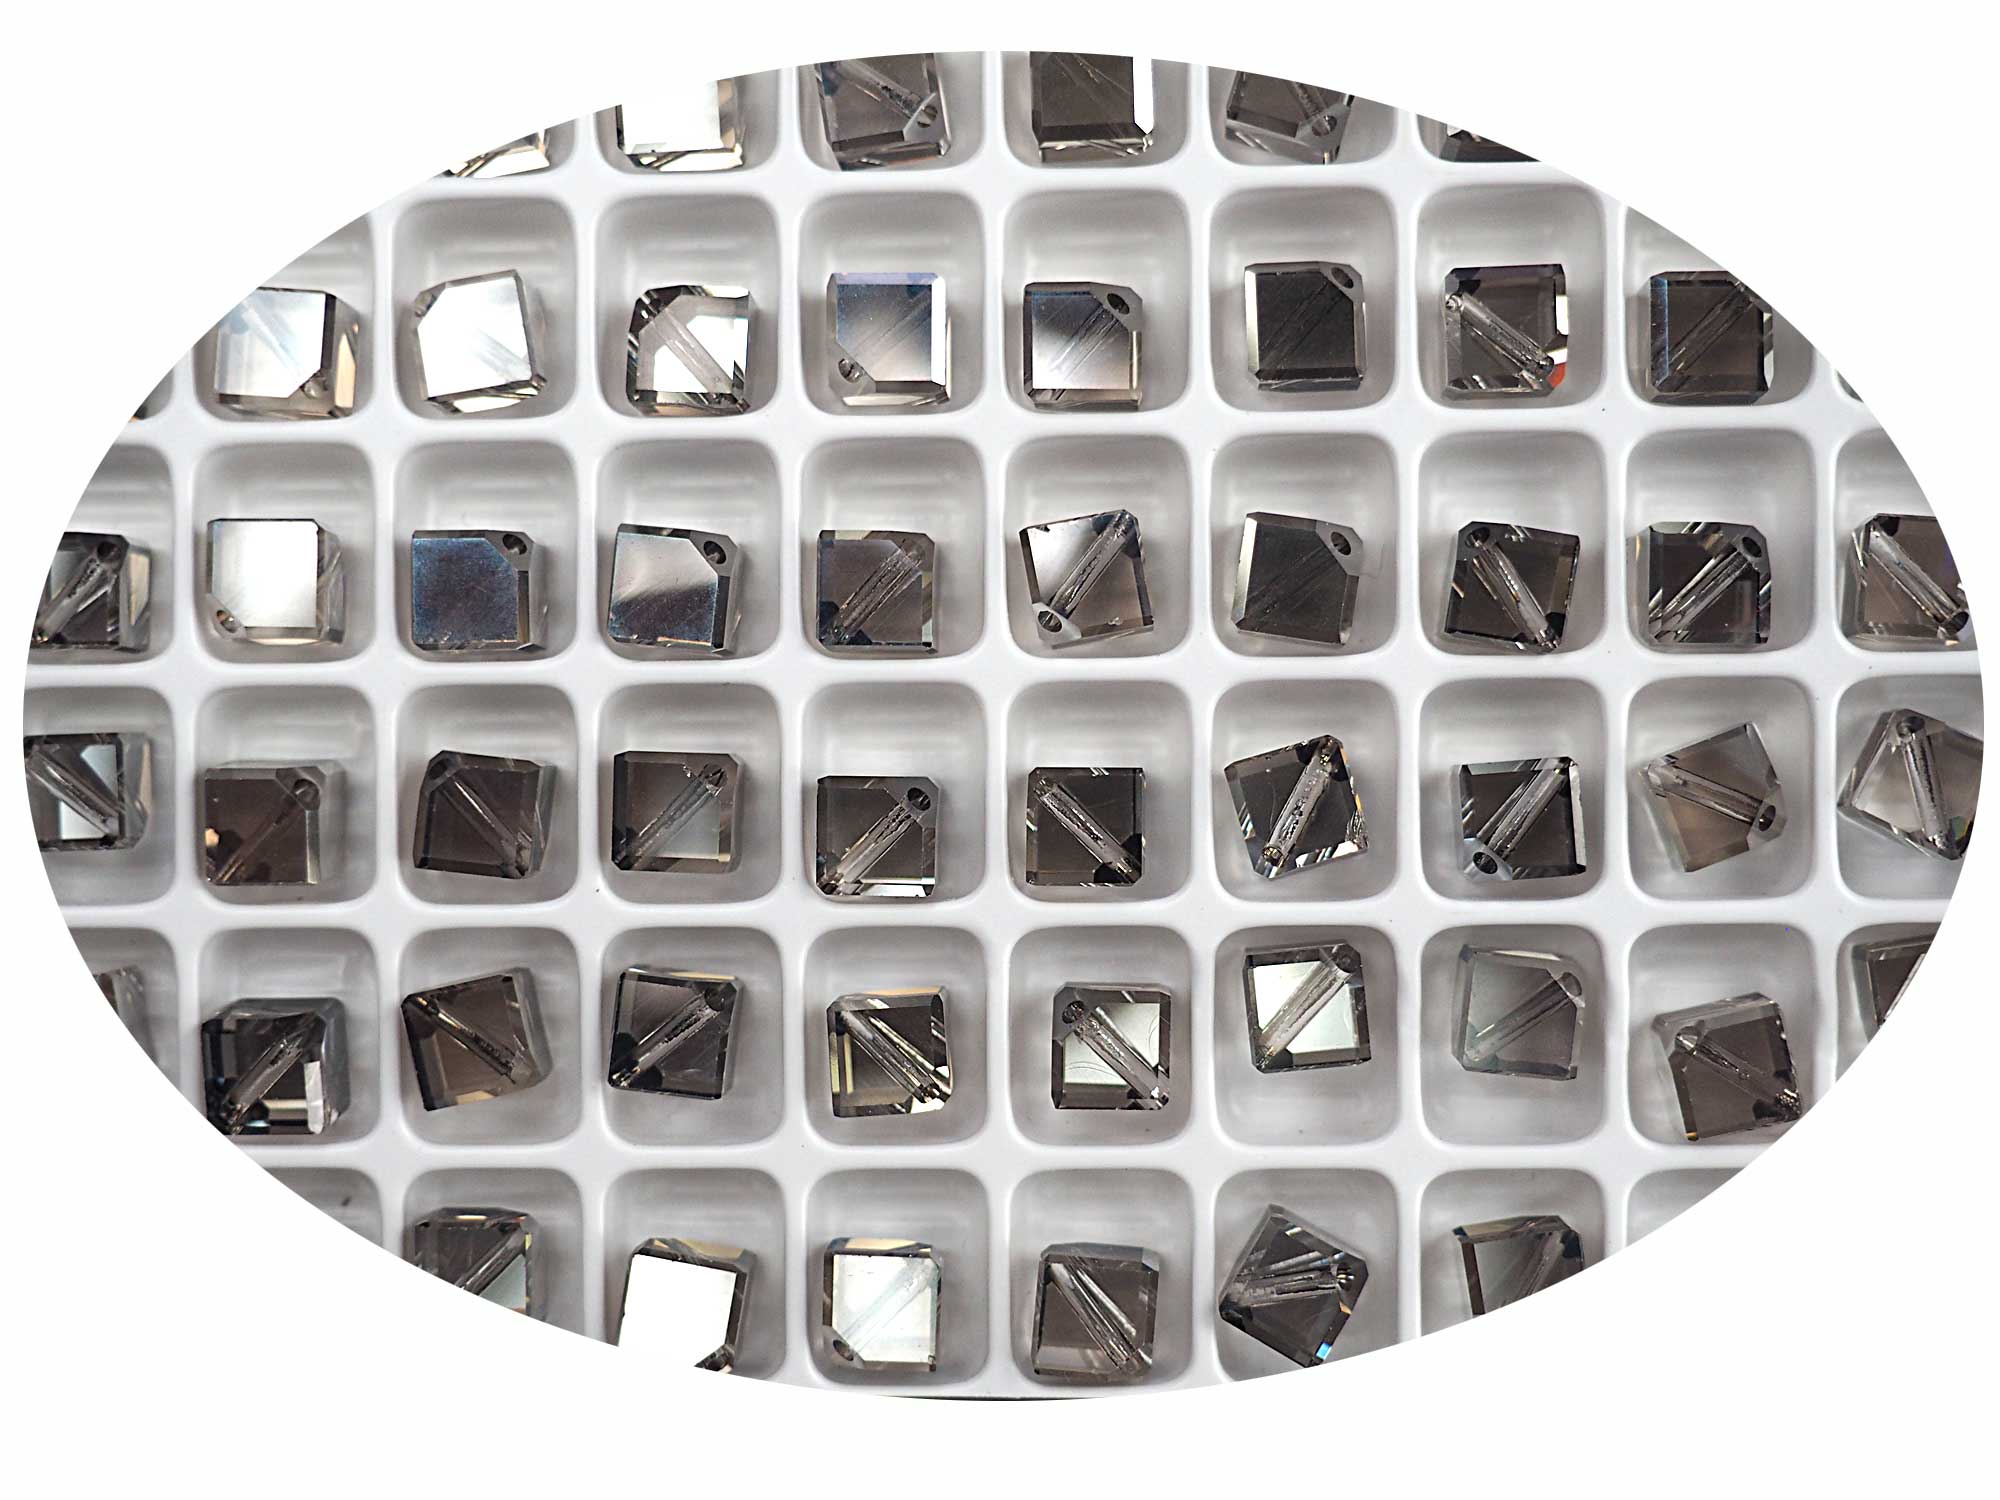 Crystal Velvet coated, Preciosa Czech Machine Cut Diagonal Cube #002 Crystal Beads, size 6mm, 12 pieces